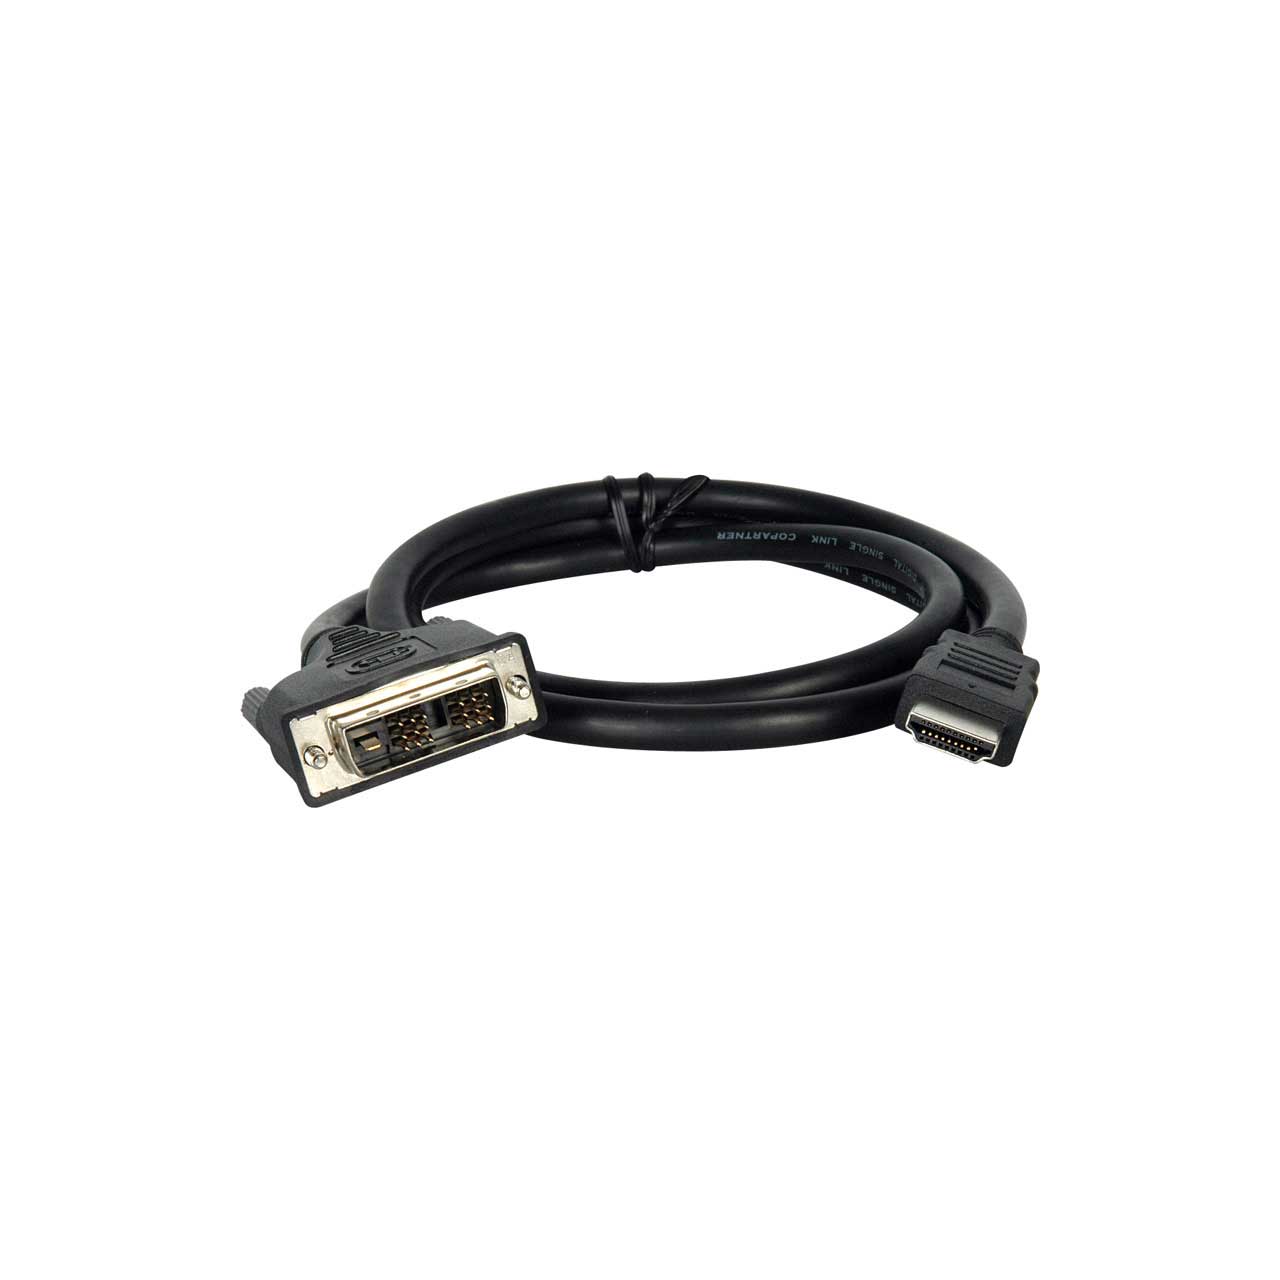 HDMI Digital Audio/Video to DVI-D (Dual-Link) Digital Video Adapter